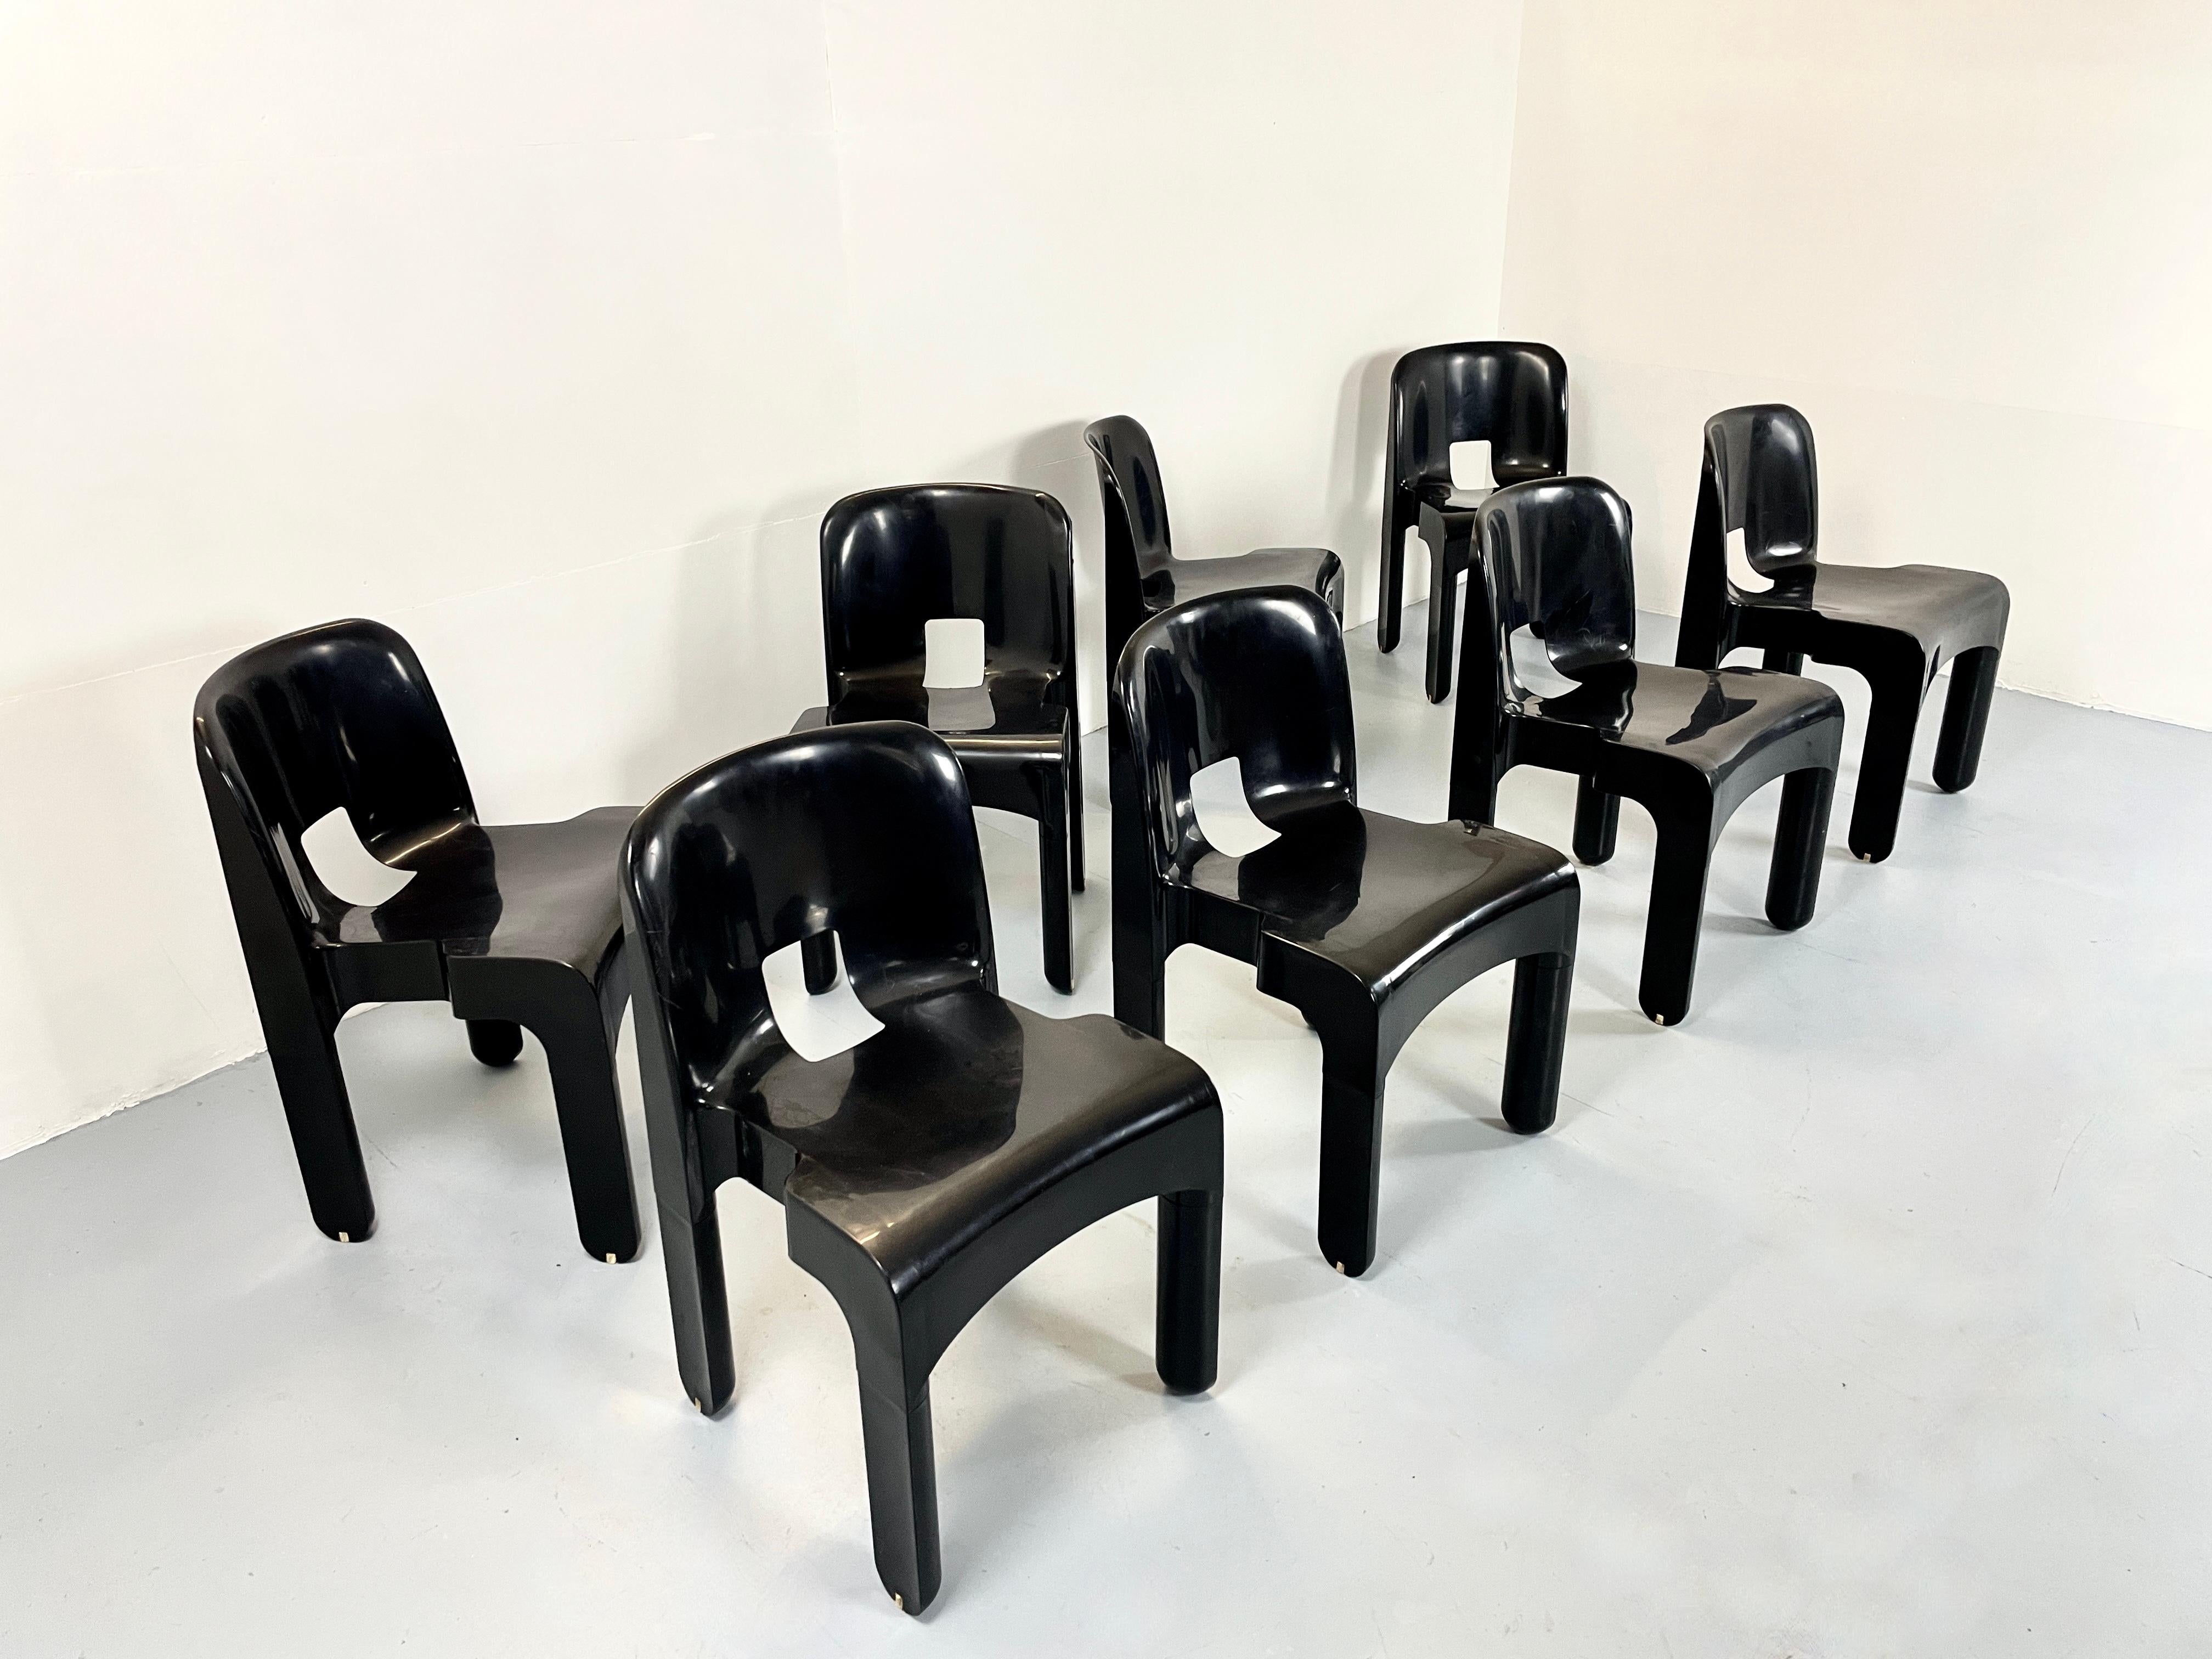  Joe Colombo, Universale Plastic Chair für Kartell, Weiß, Italien, Vintage, Space Age (Ende des 20. Jahrhunderts)